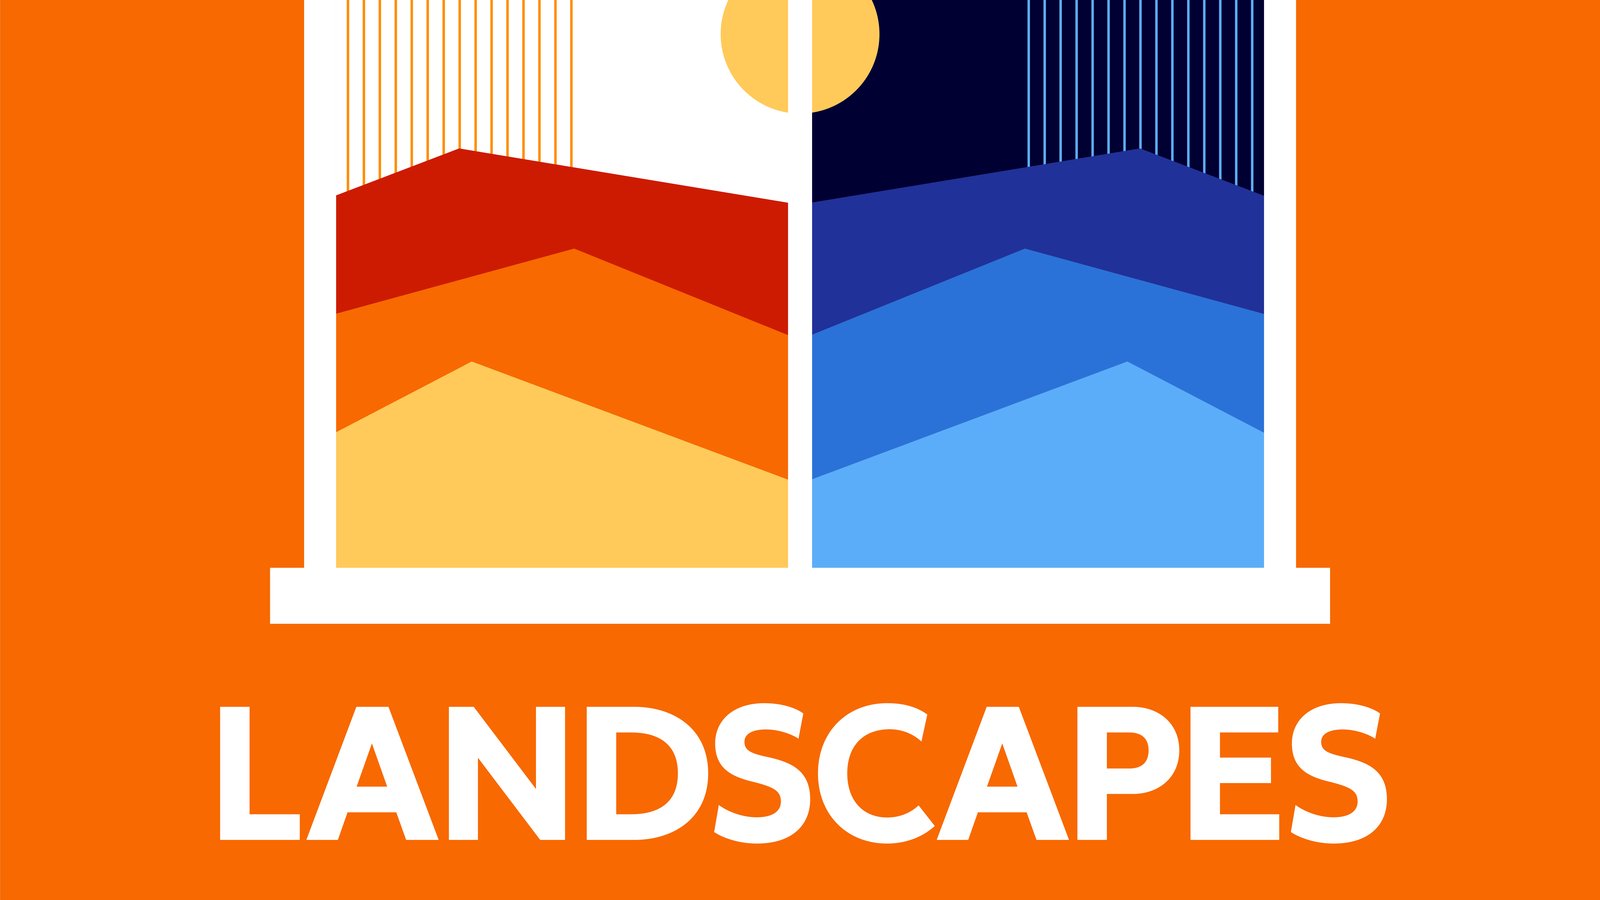 Landscapes illustration shows a half orange / half blue wavy horizon as viewed out a split window pane